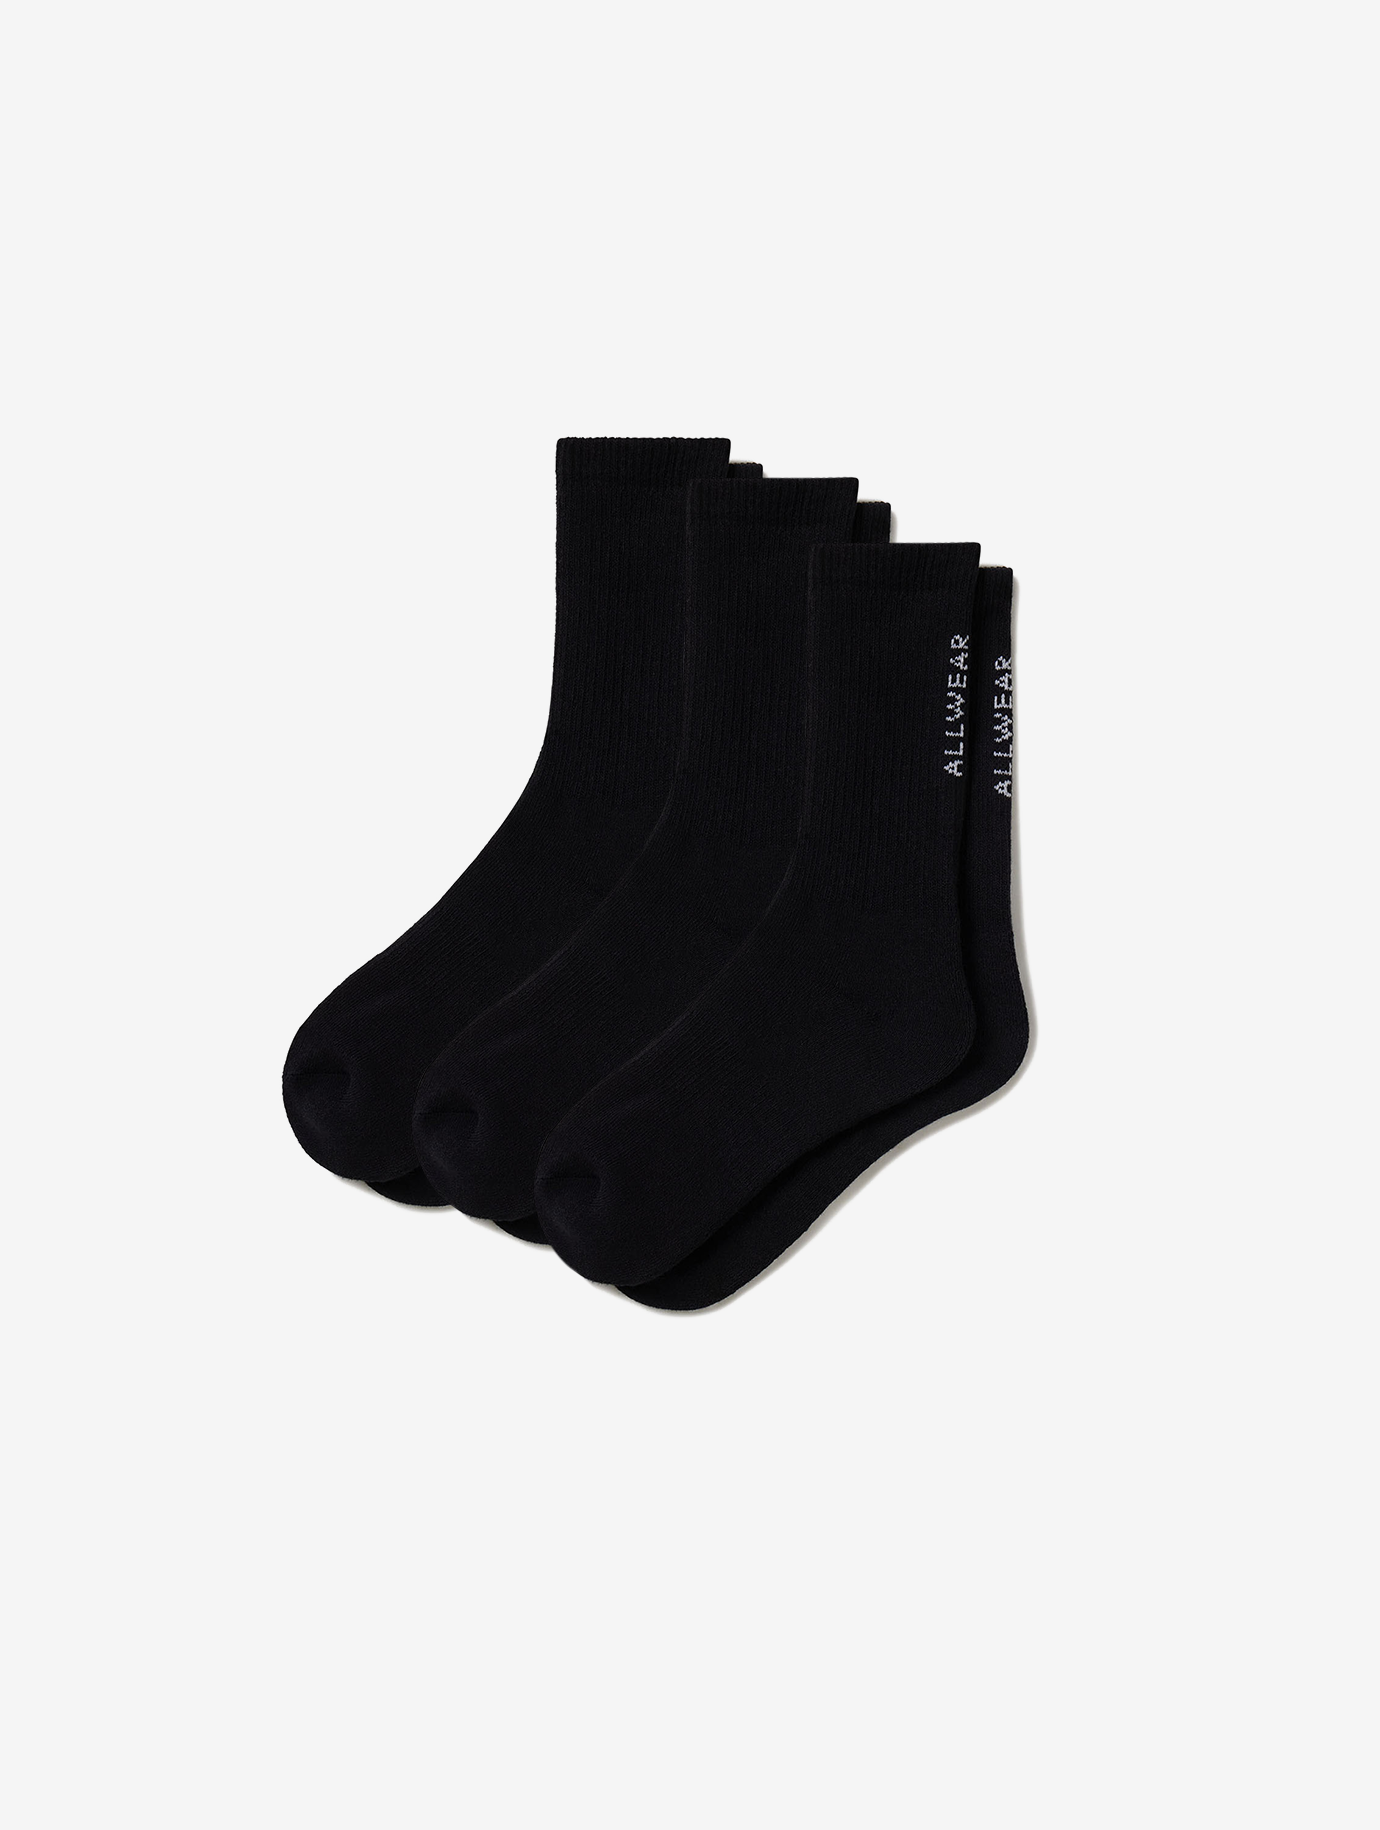 Allwear Organic Crew Socks 3 Pack Bundle - Allwear